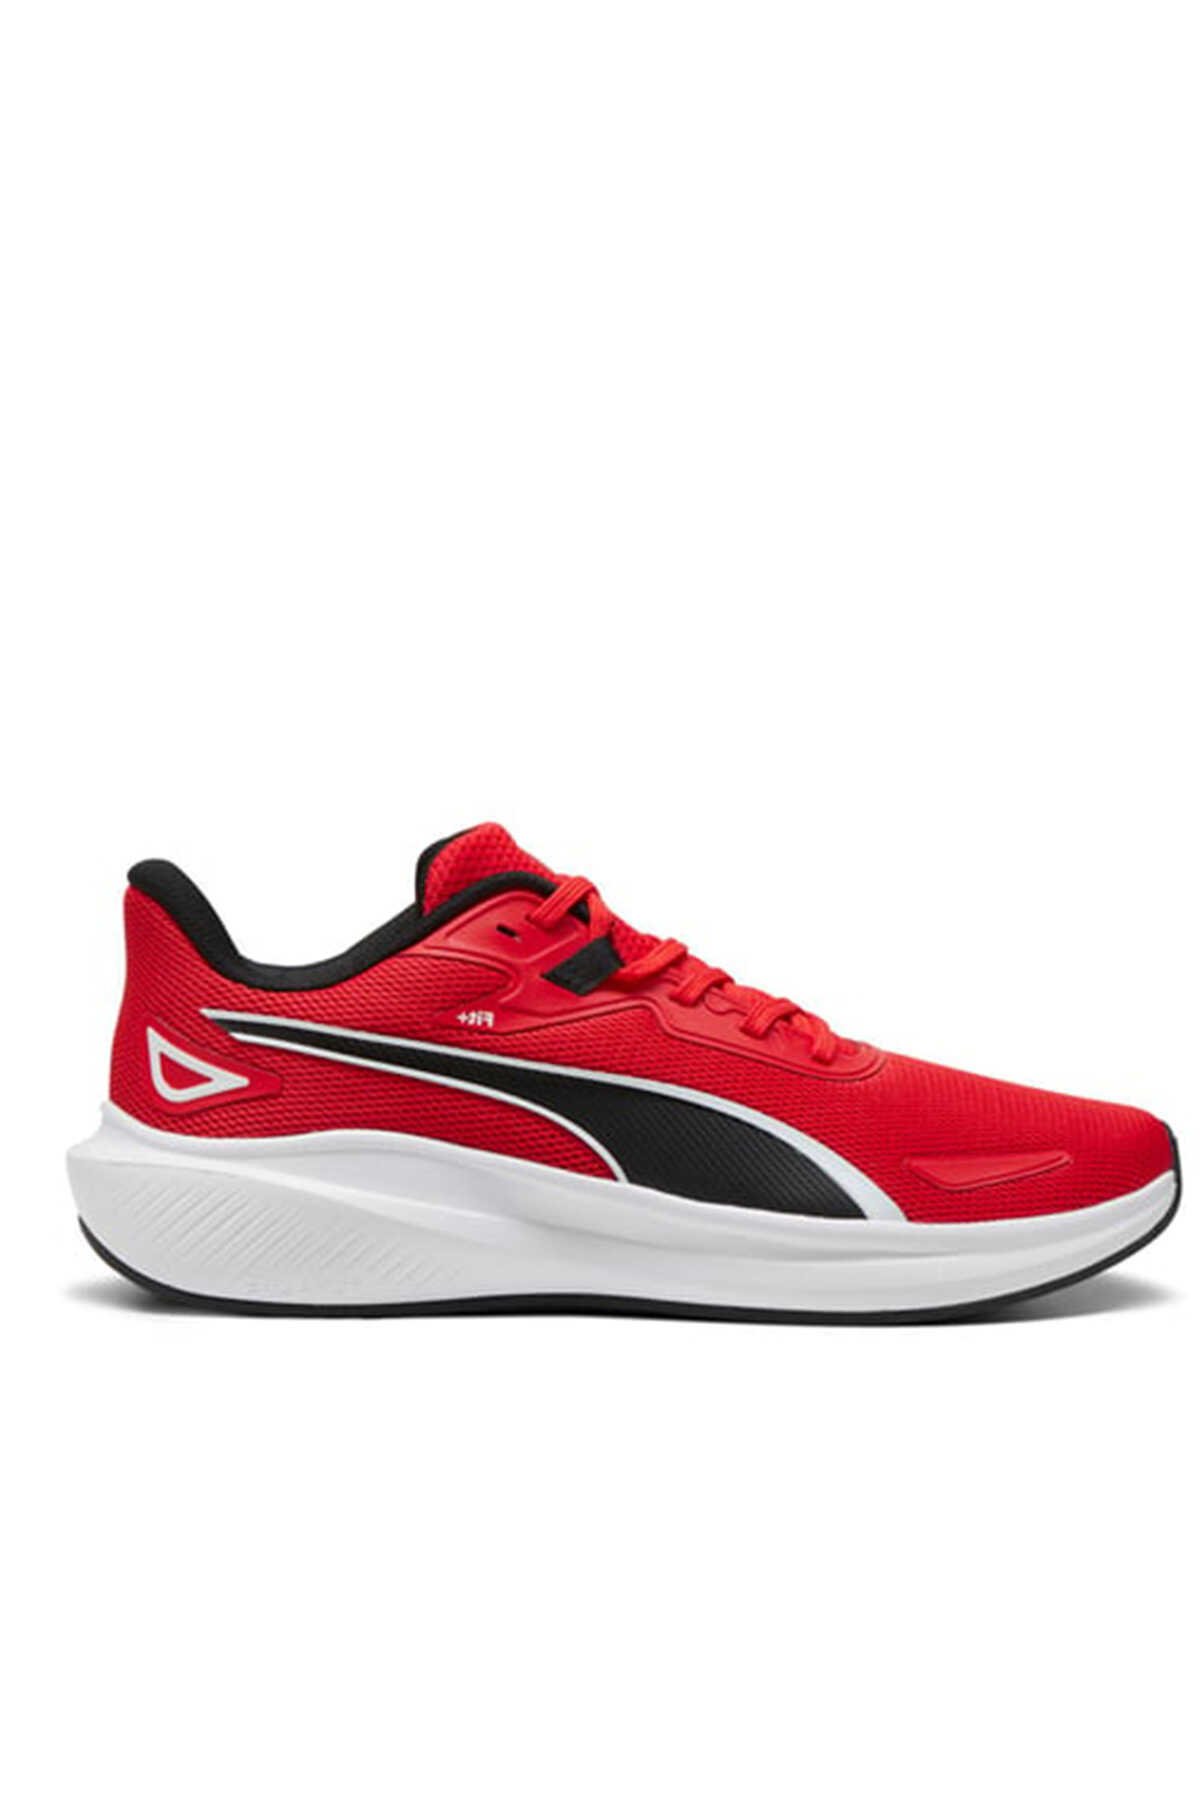 Puma - Puma Skyrocket Lite Erkek Sneaker Ayakkabı Kırmızı